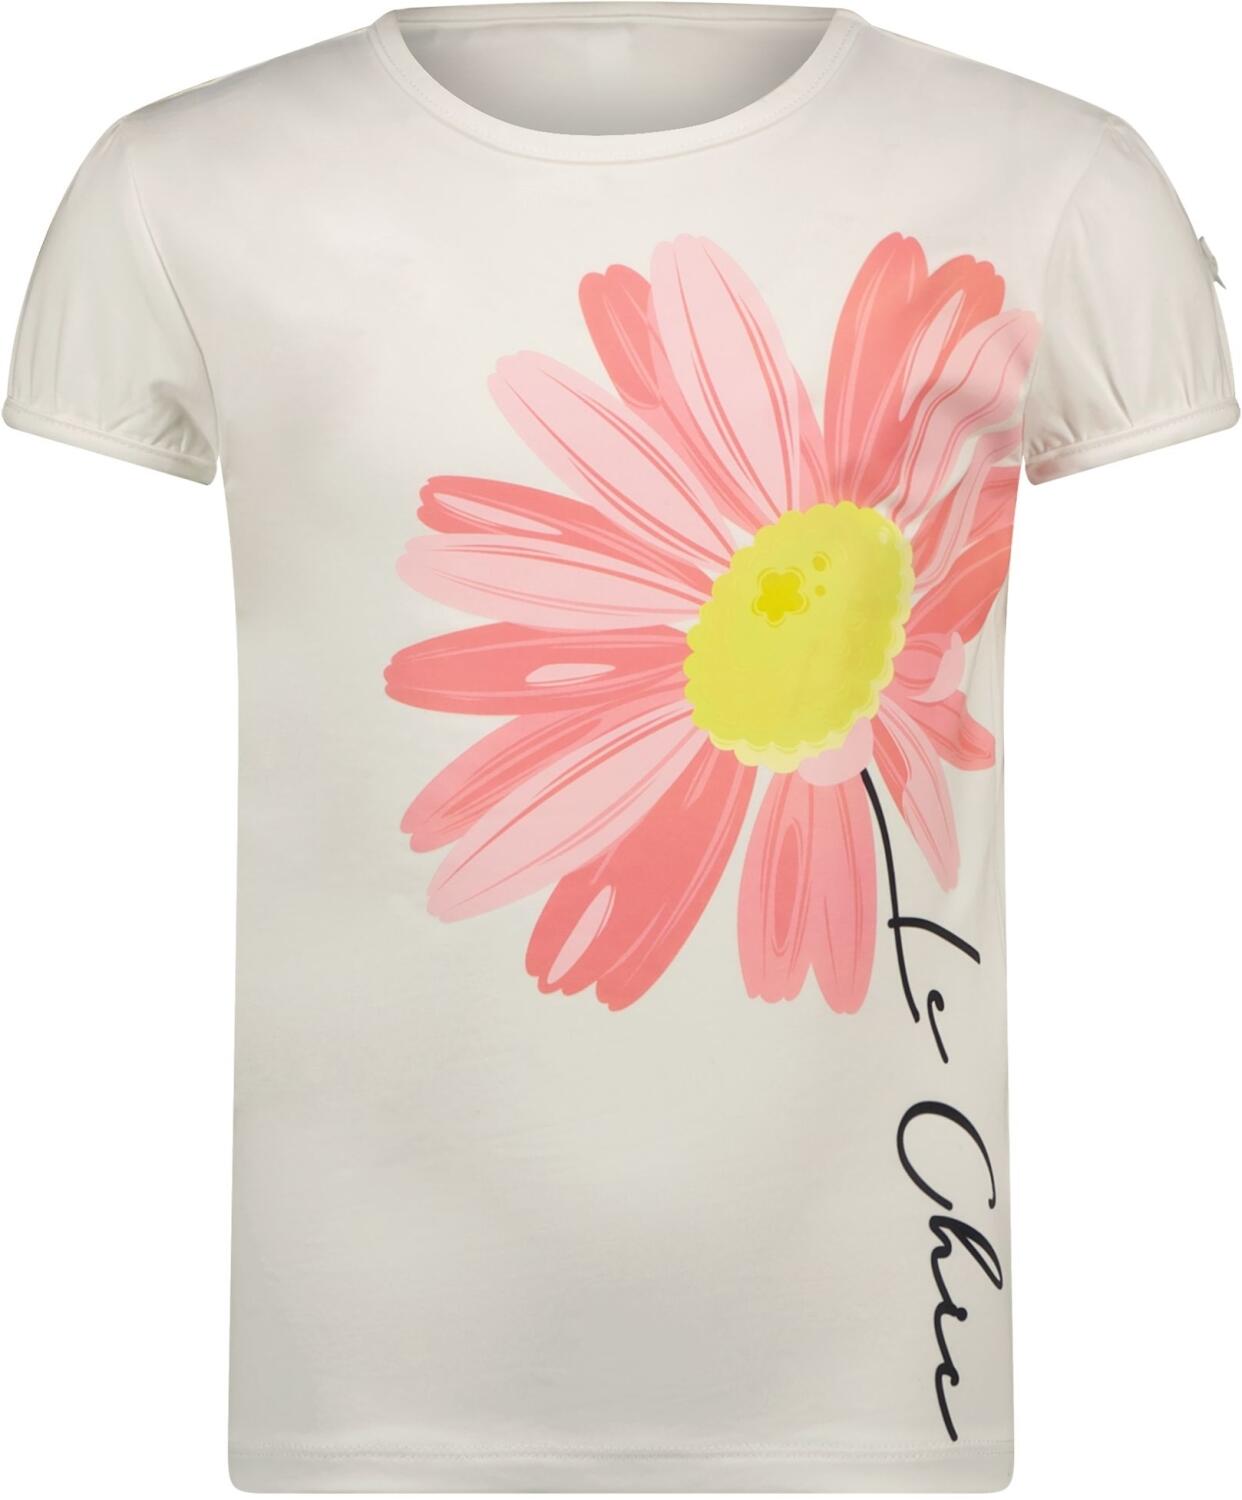 Le Chic Mädchen T-Shirt Kurzarm Blumendruck weiß